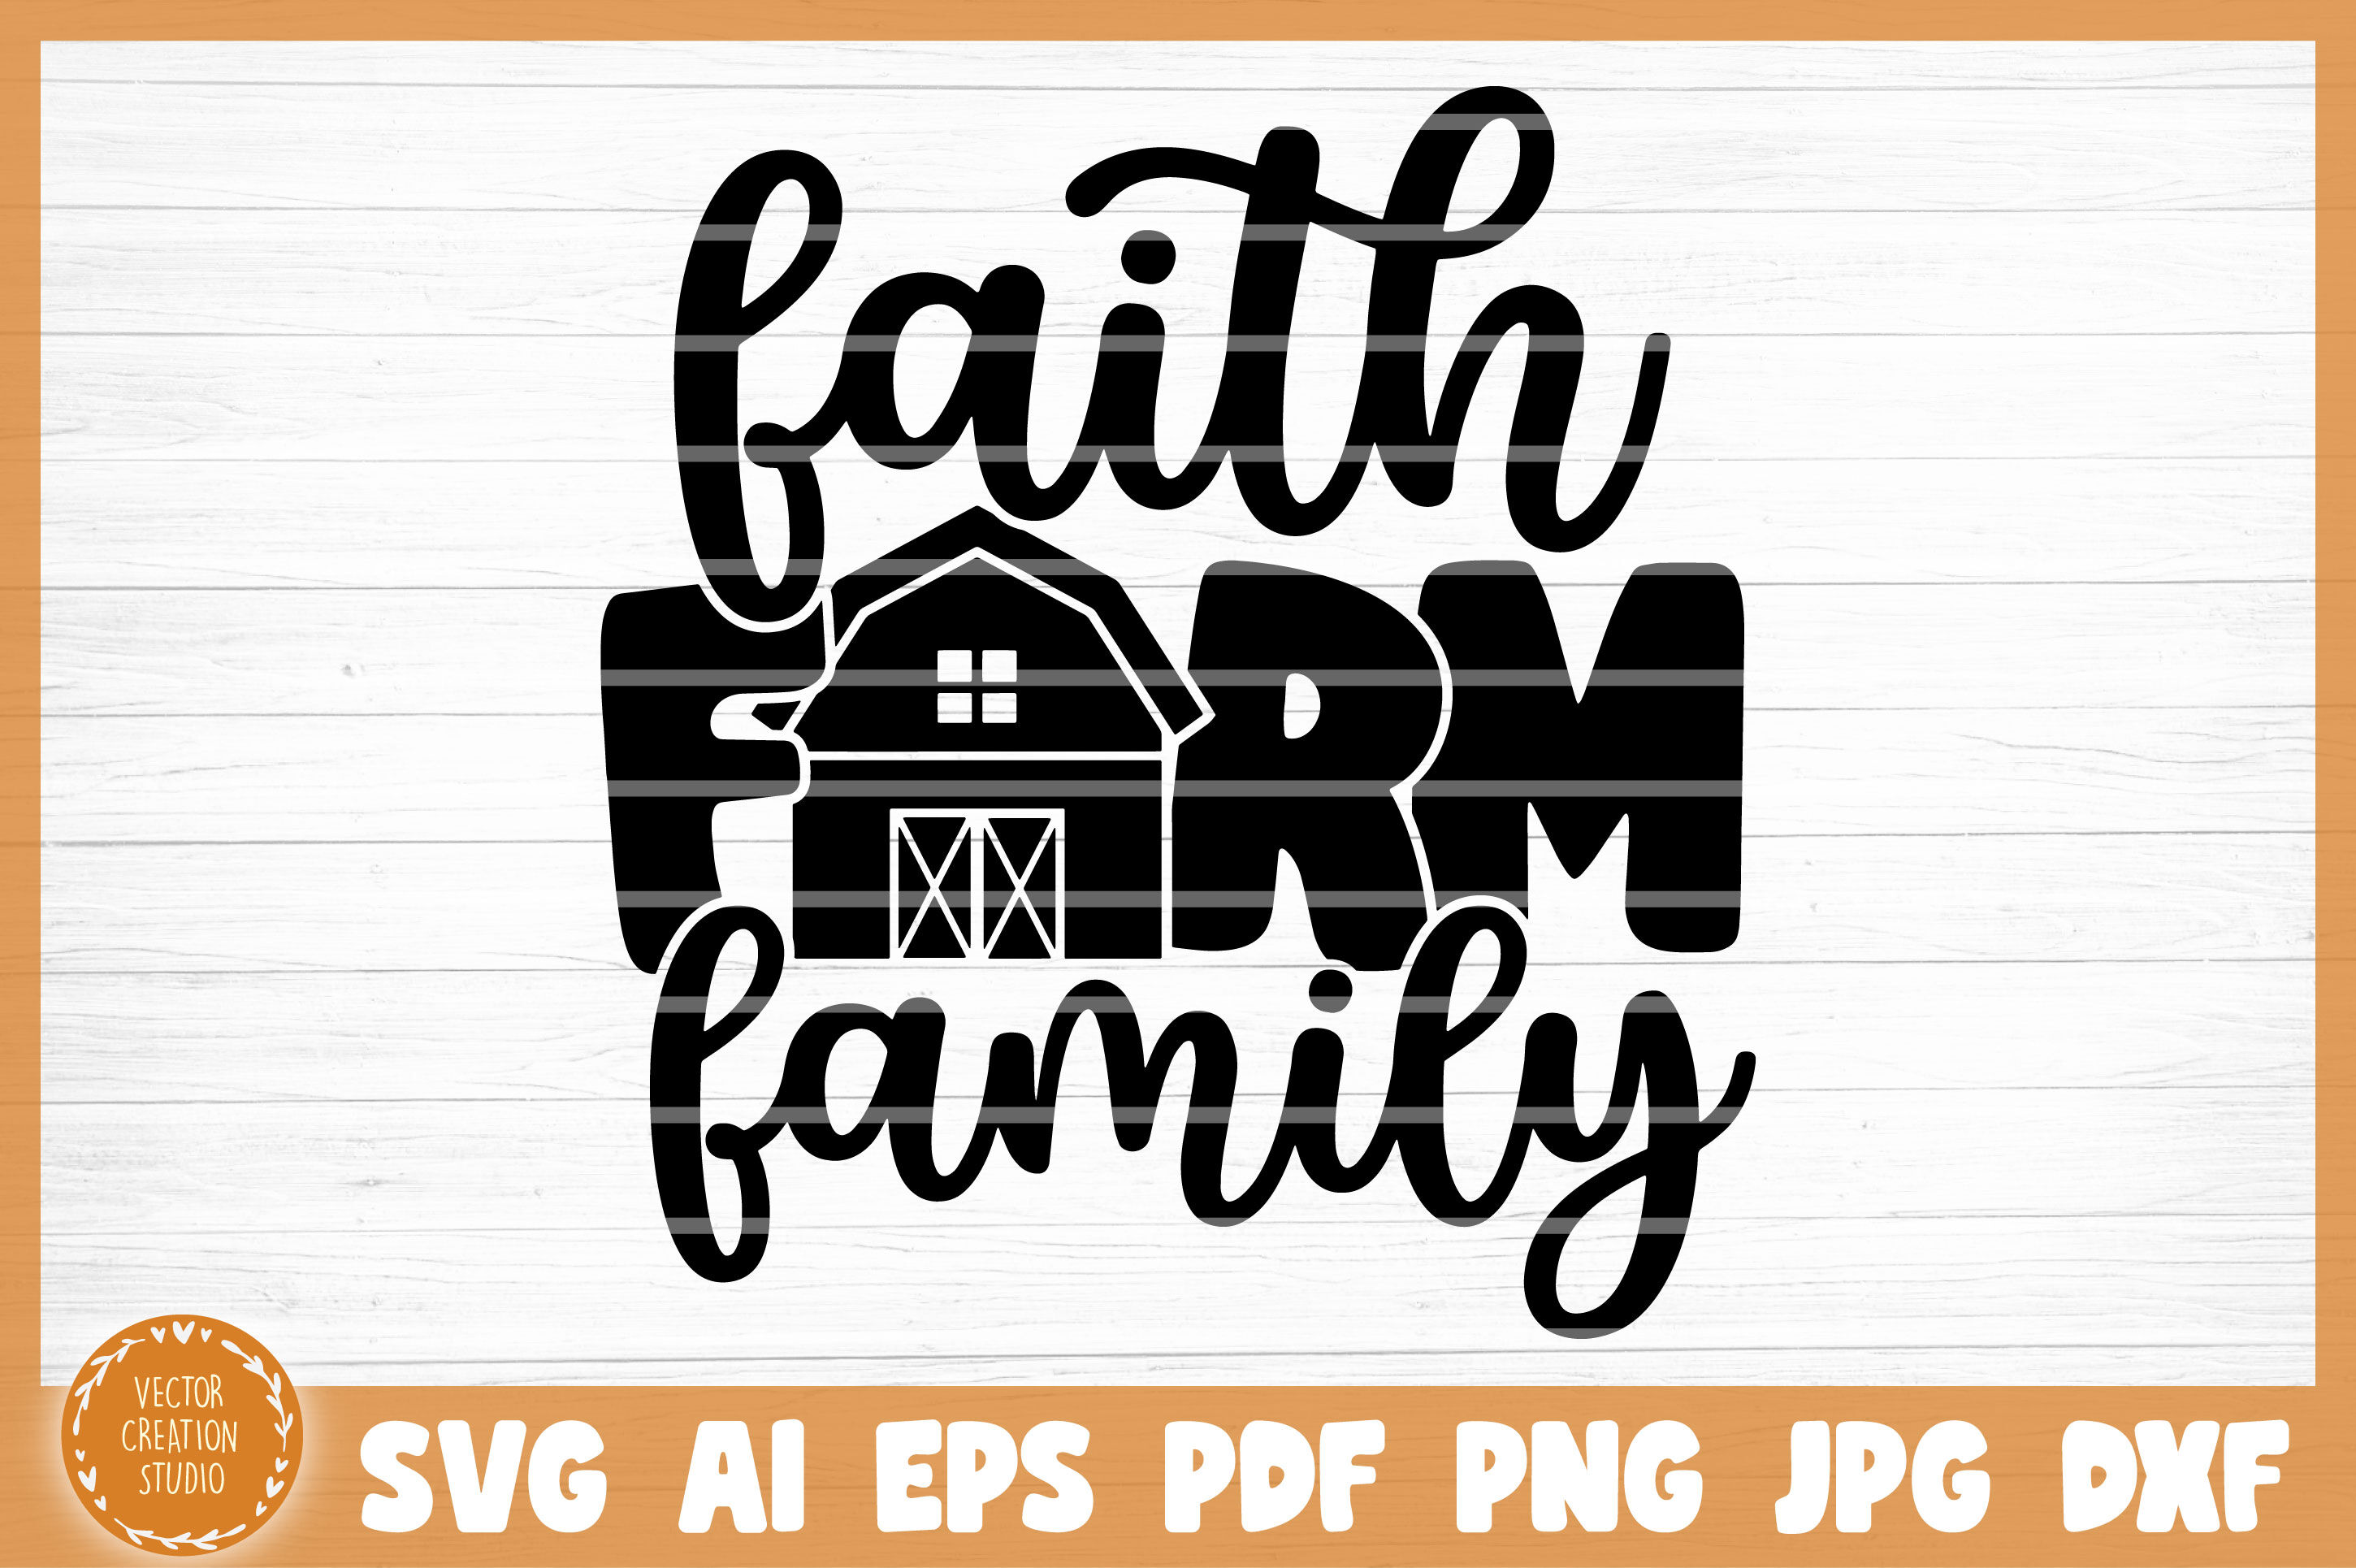 Download Faith Farm Family Svg Cut File By Vectorcreationstudio Thehungryjpeg Com